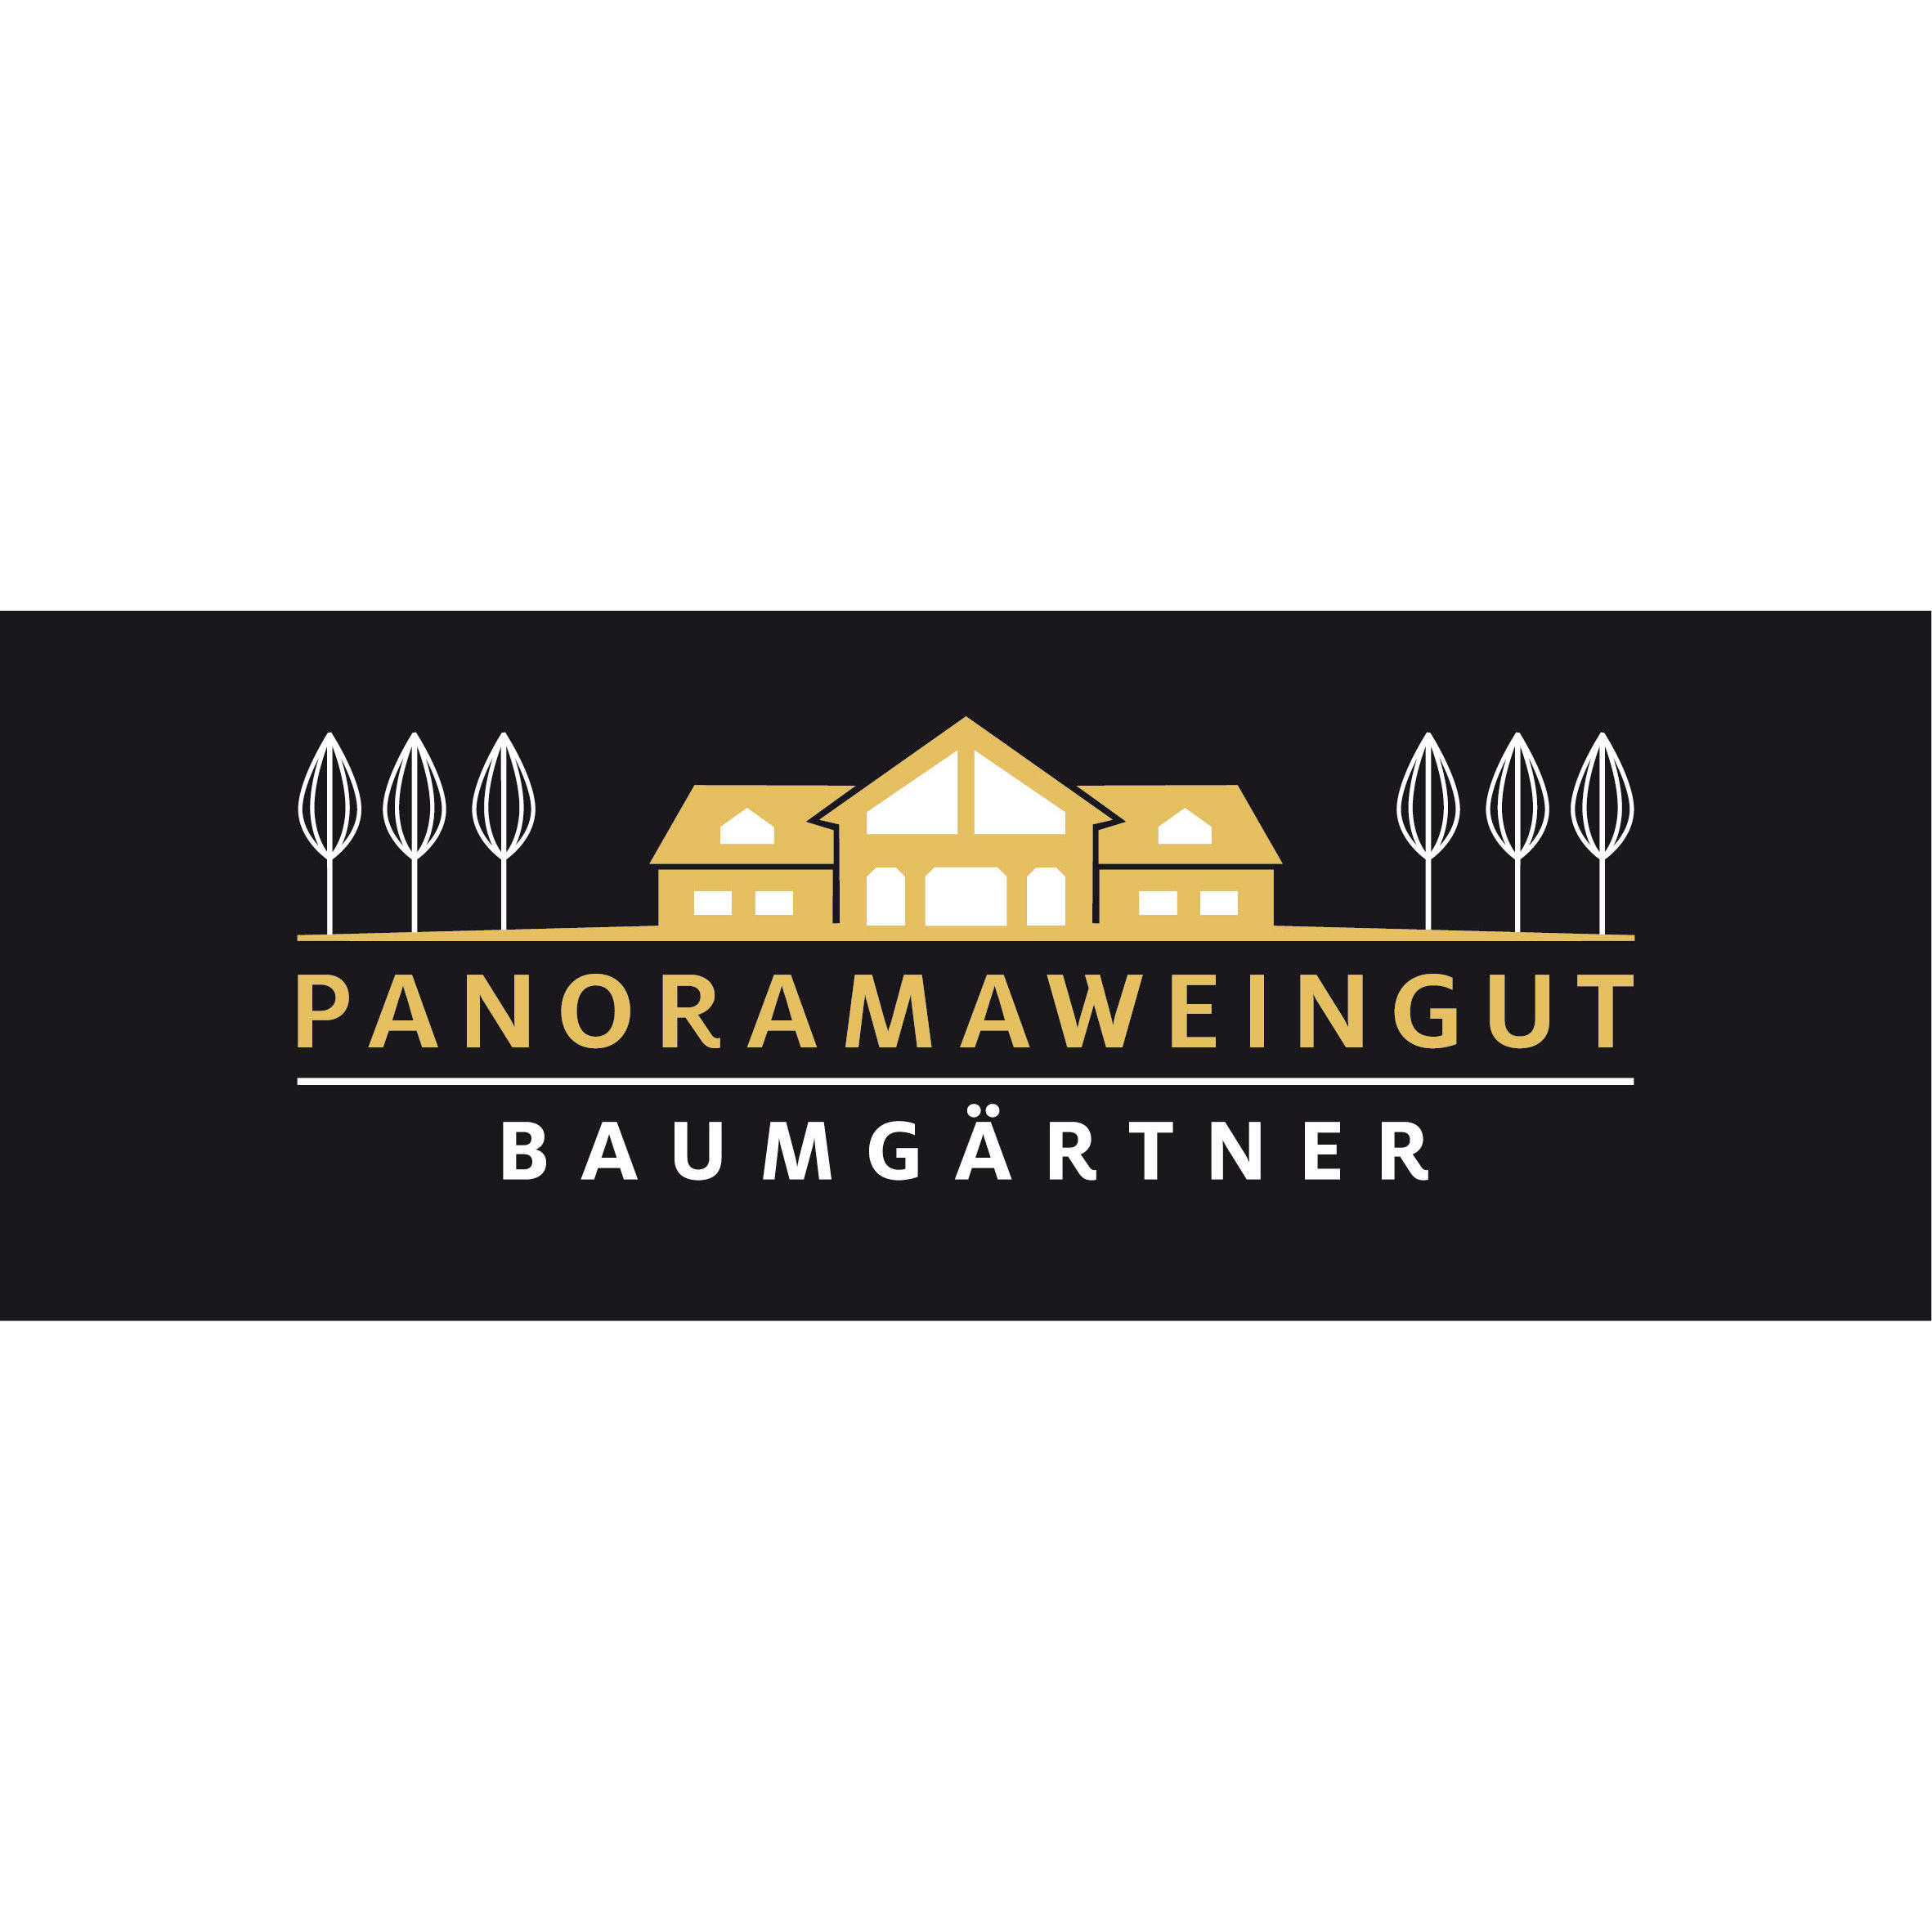 Panoramaweingut Baumgärtner in Sachsenheim in Württemberg - Logo